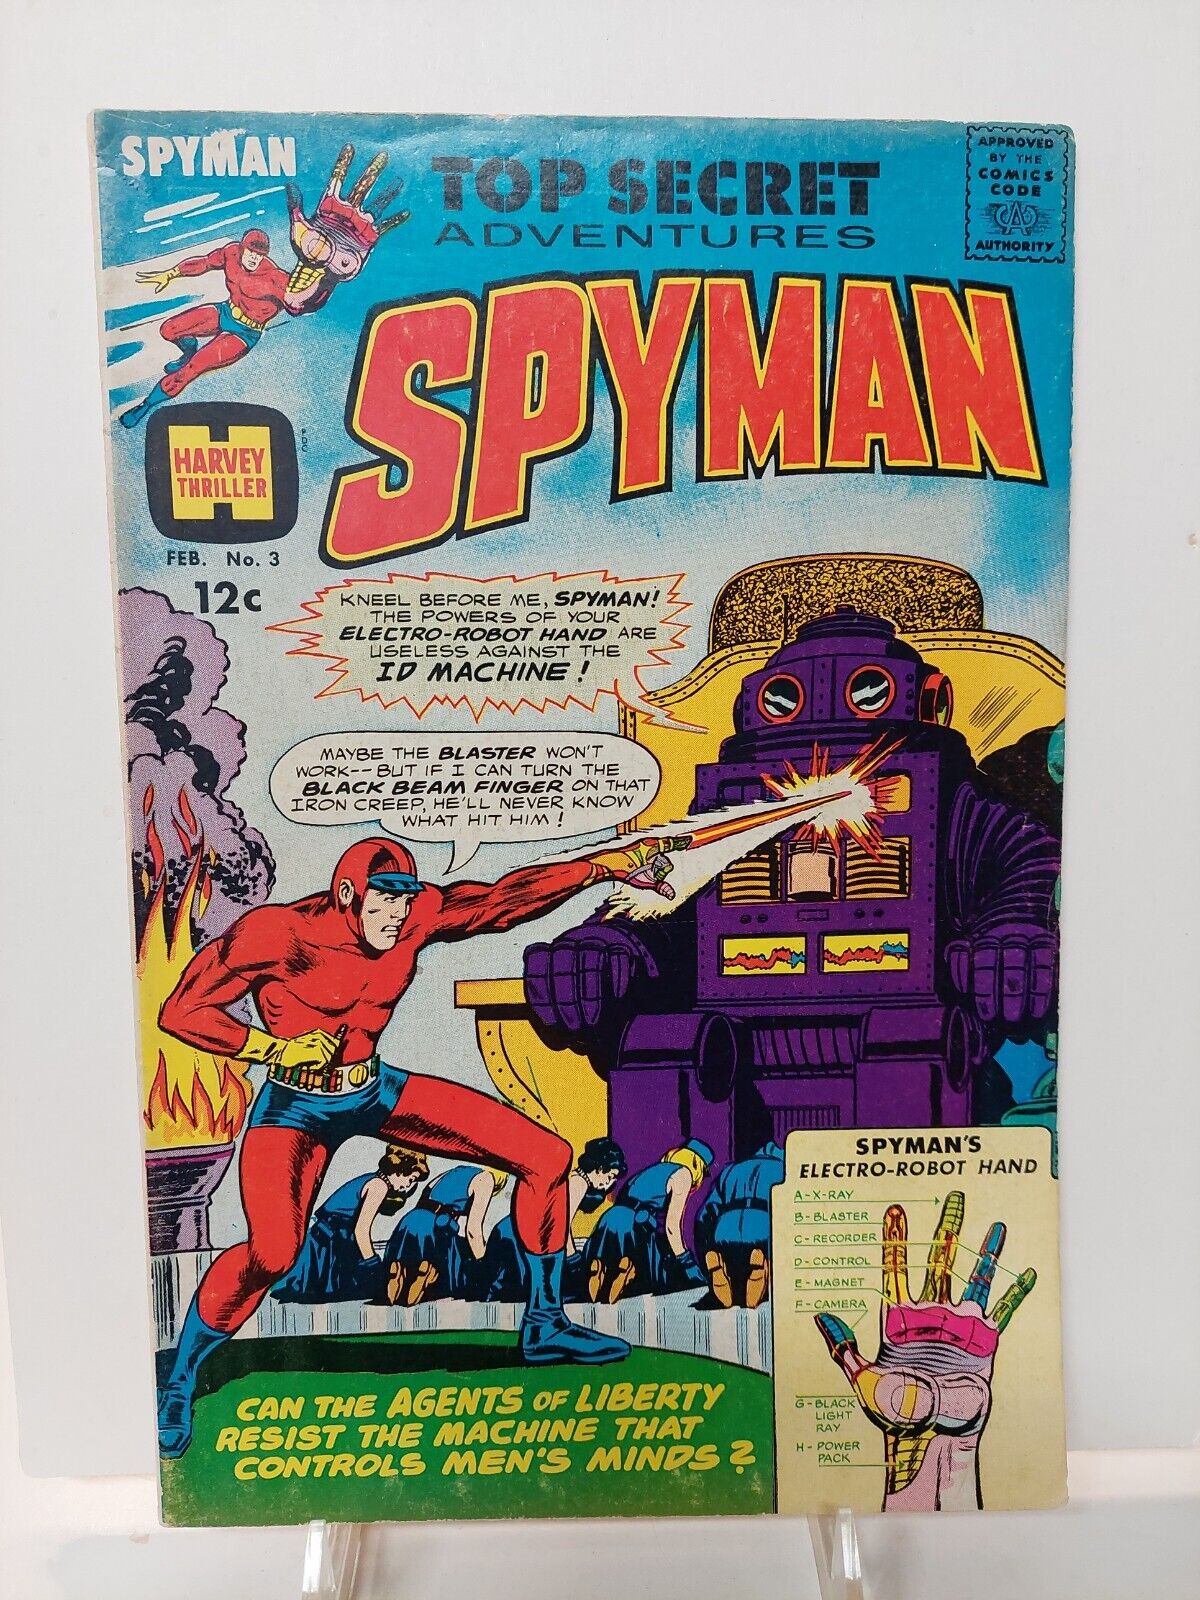 Spyman #3       Top Secret Adventures Spyman       Harvey Comics 1966     (F395)